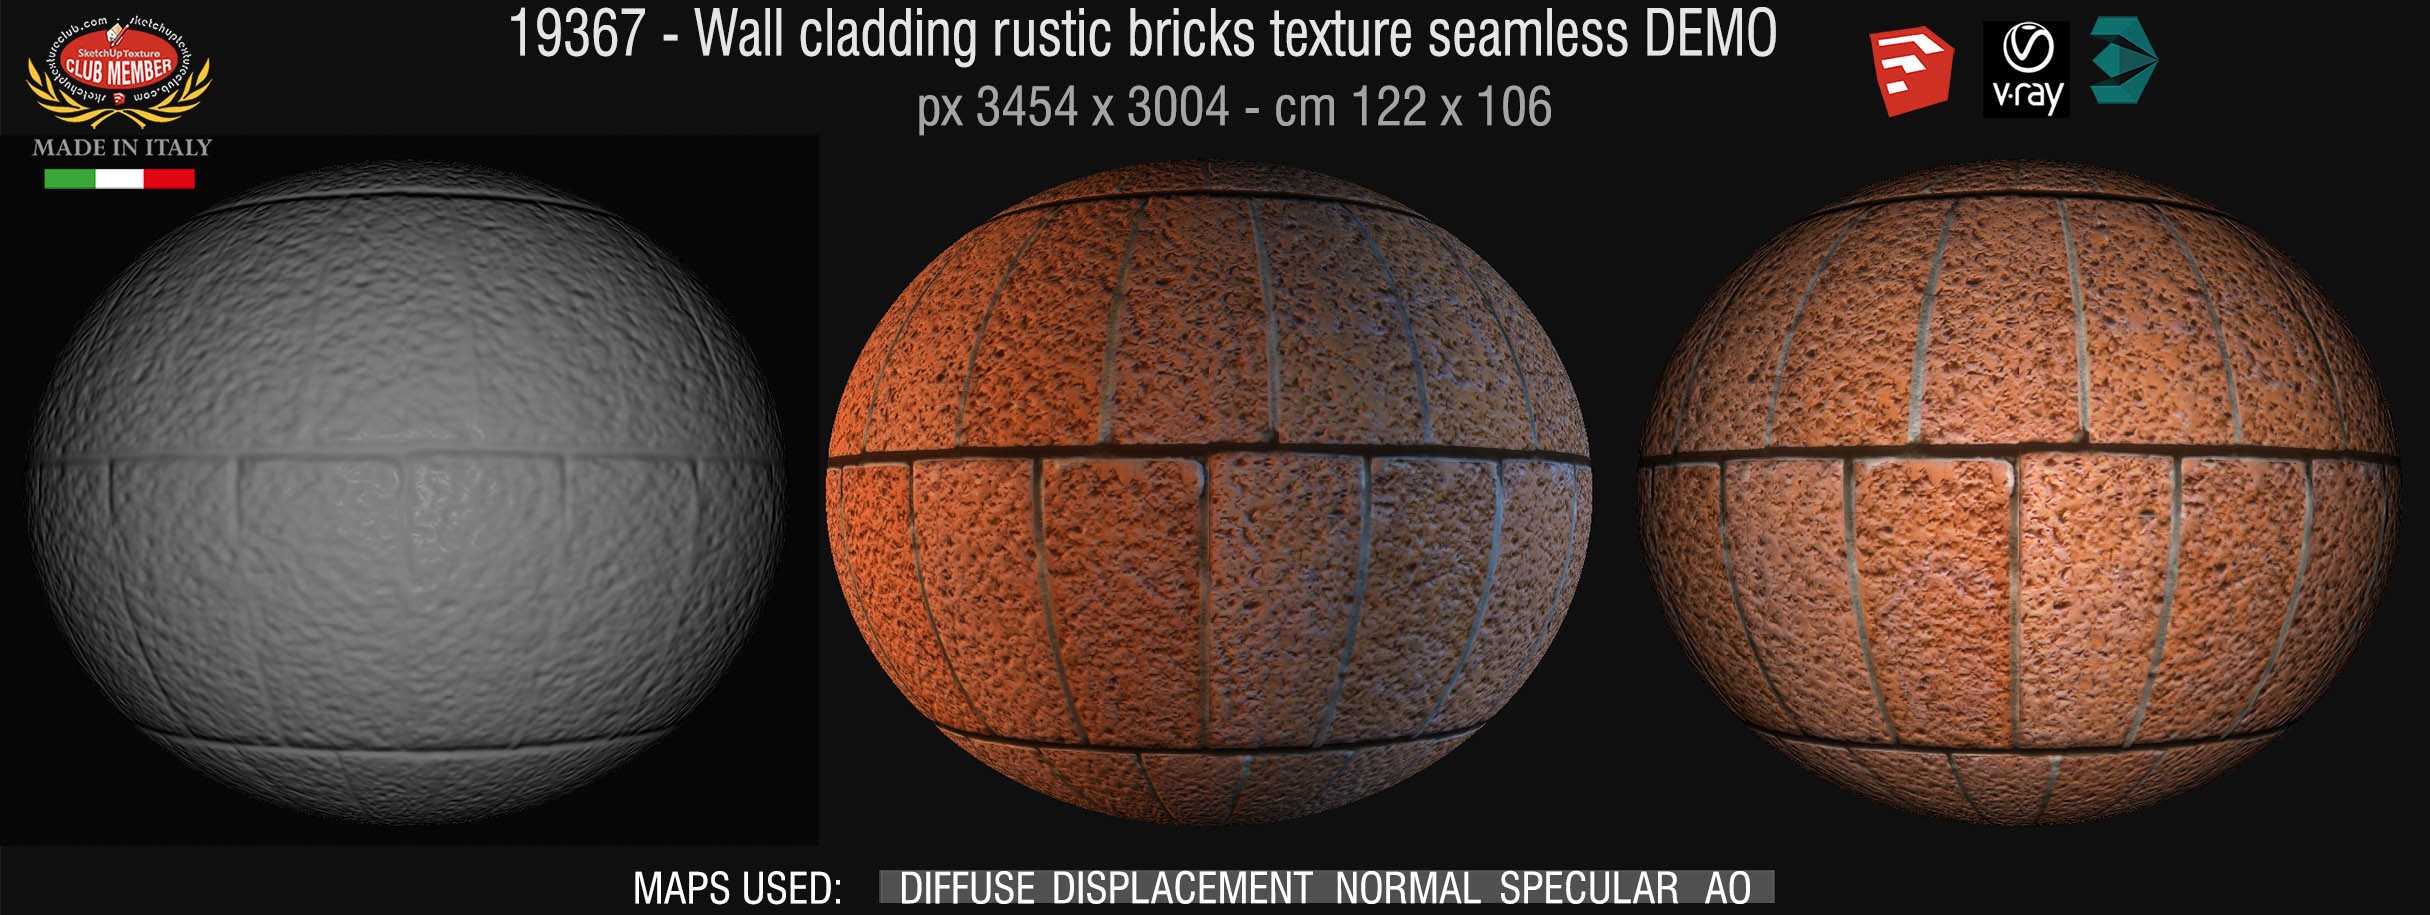 19367 seamless wall cladding rustic bricks texture + maps DEMO